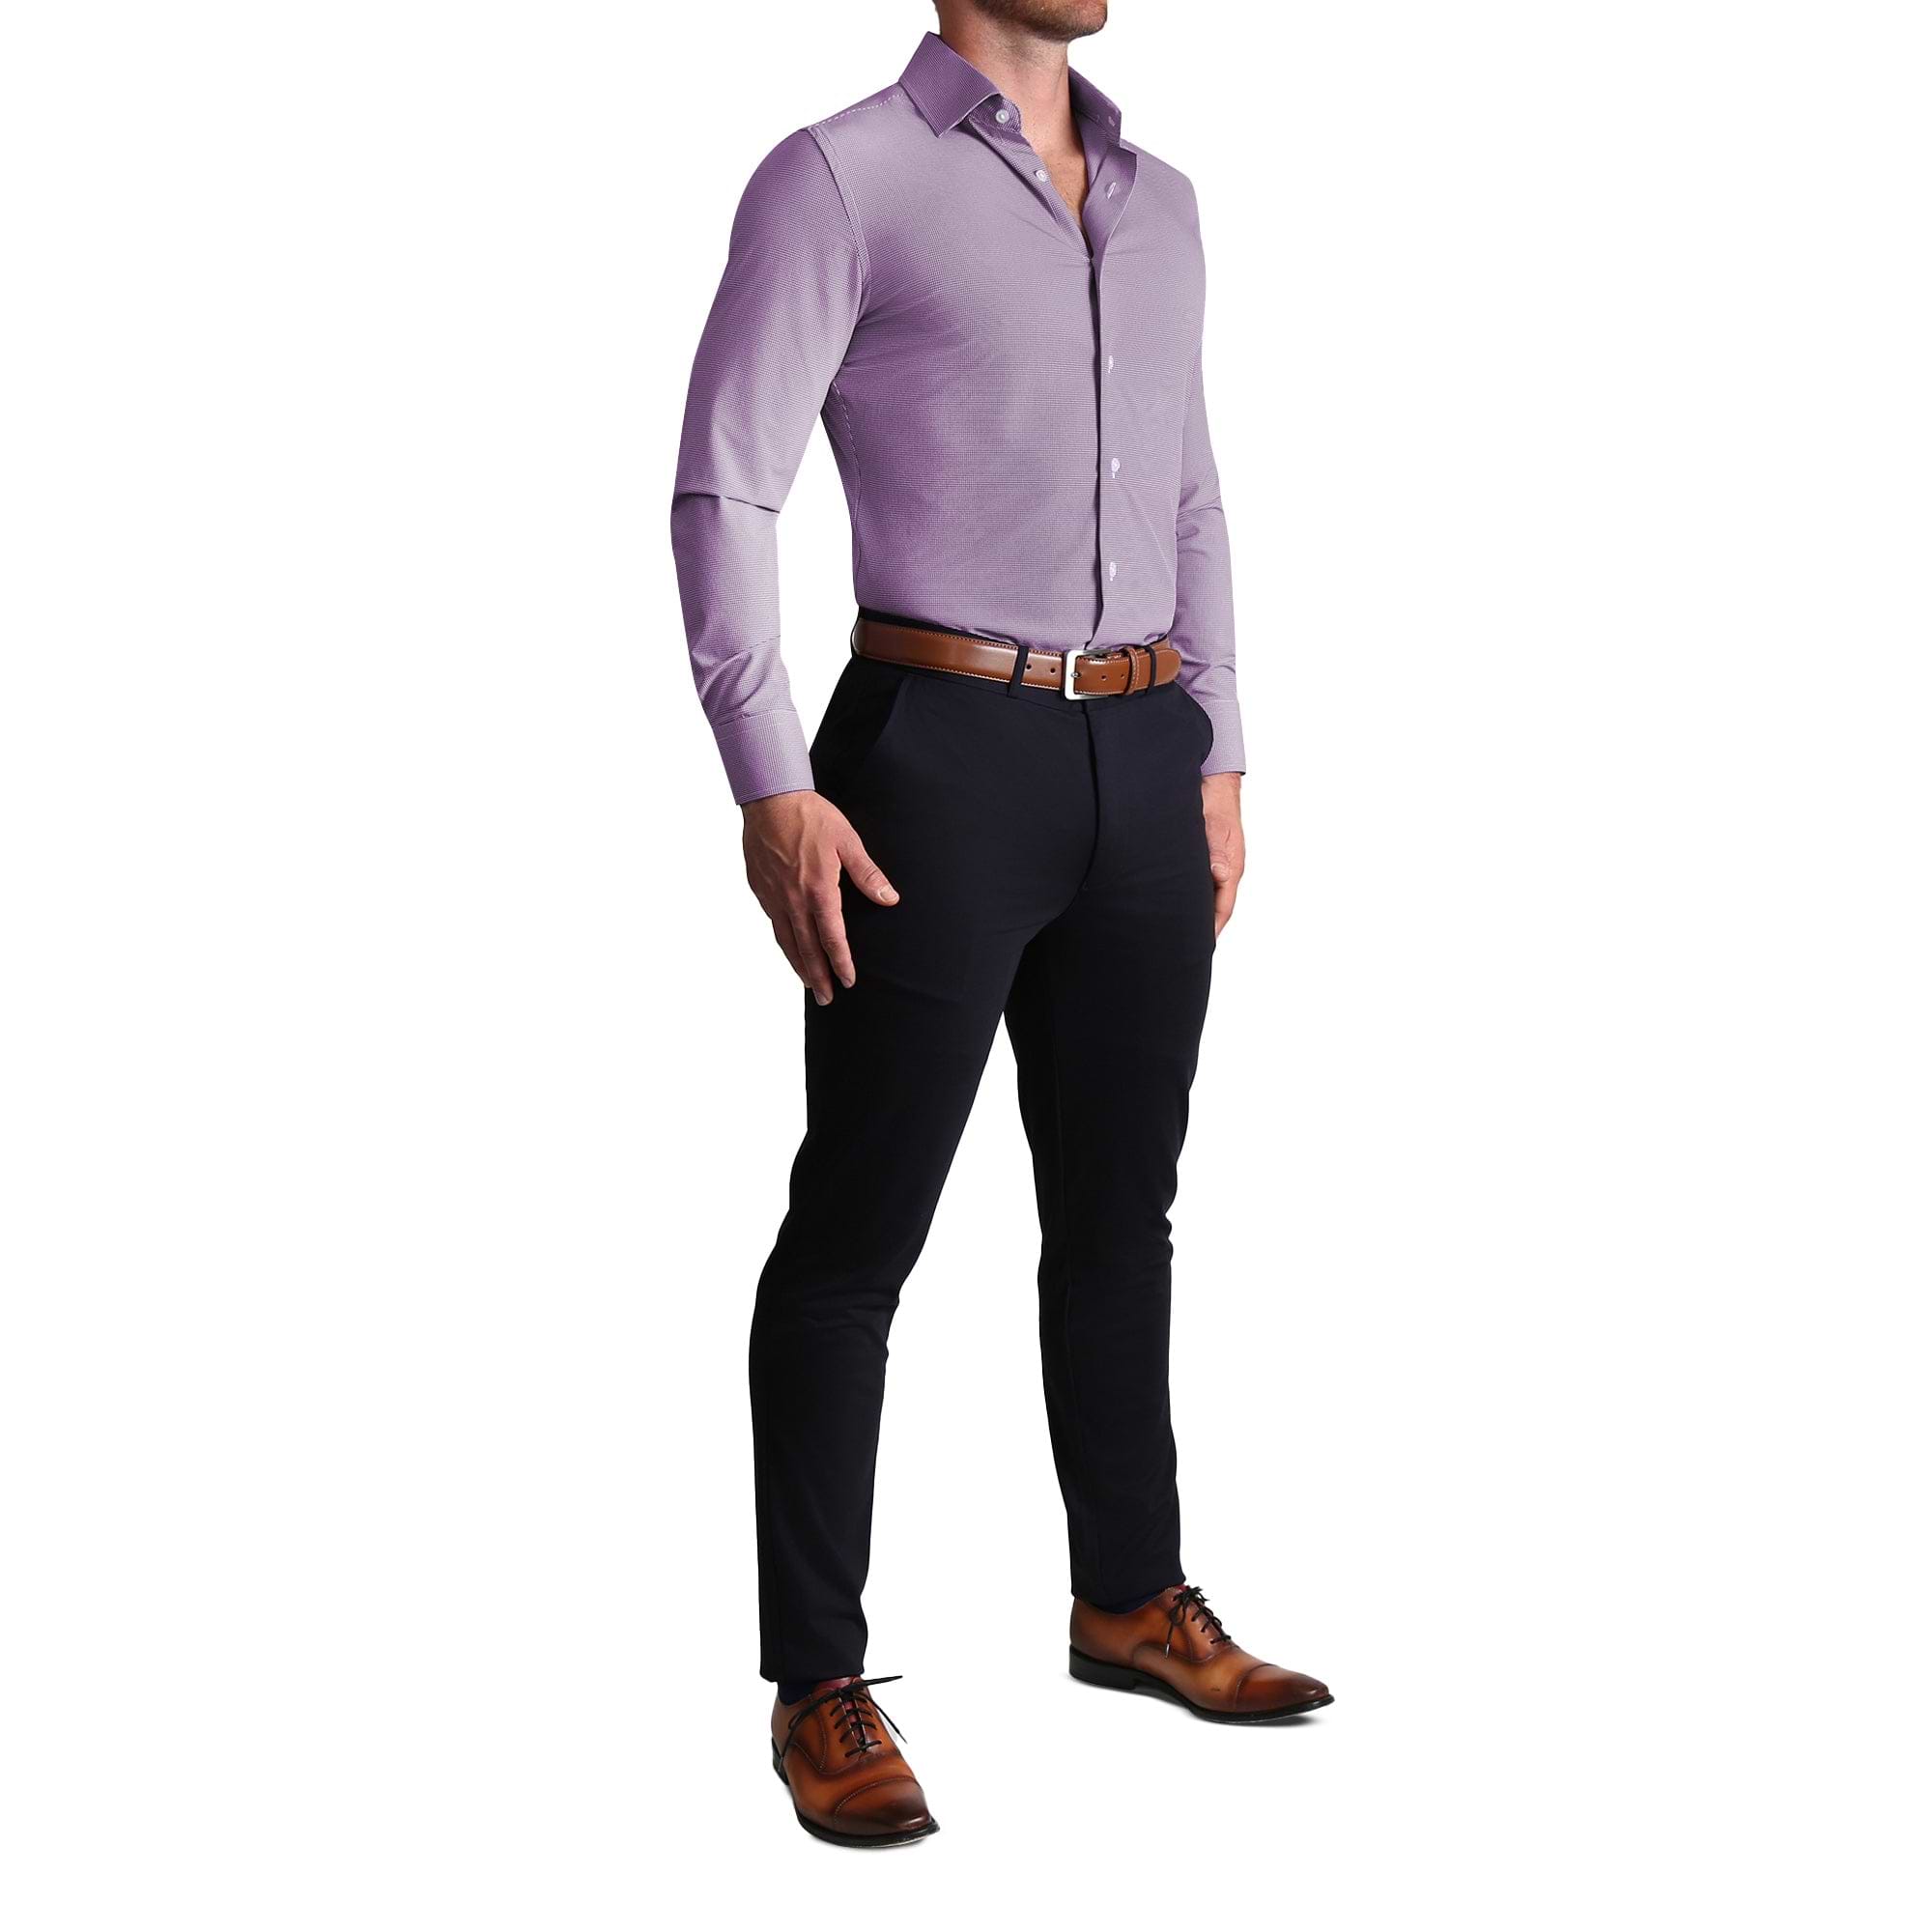 Men`s Shirt and Pants Isolated on White Background Stock Image - Image of  model, background: 193268993